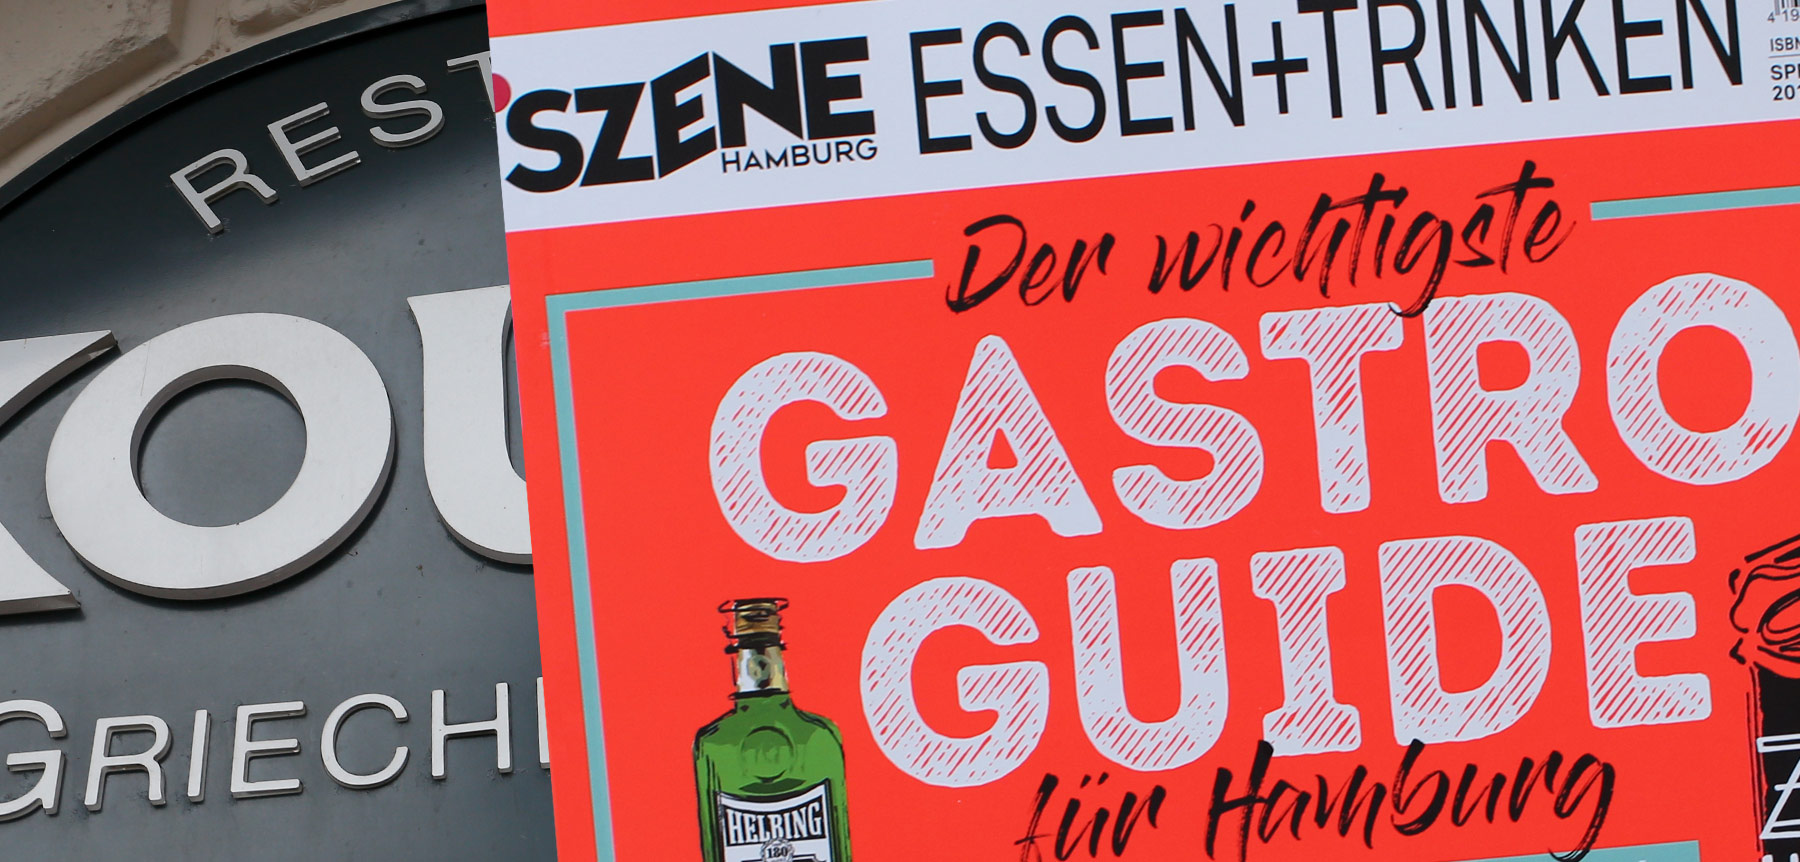 SZENE Hamburg Essen + Trinken